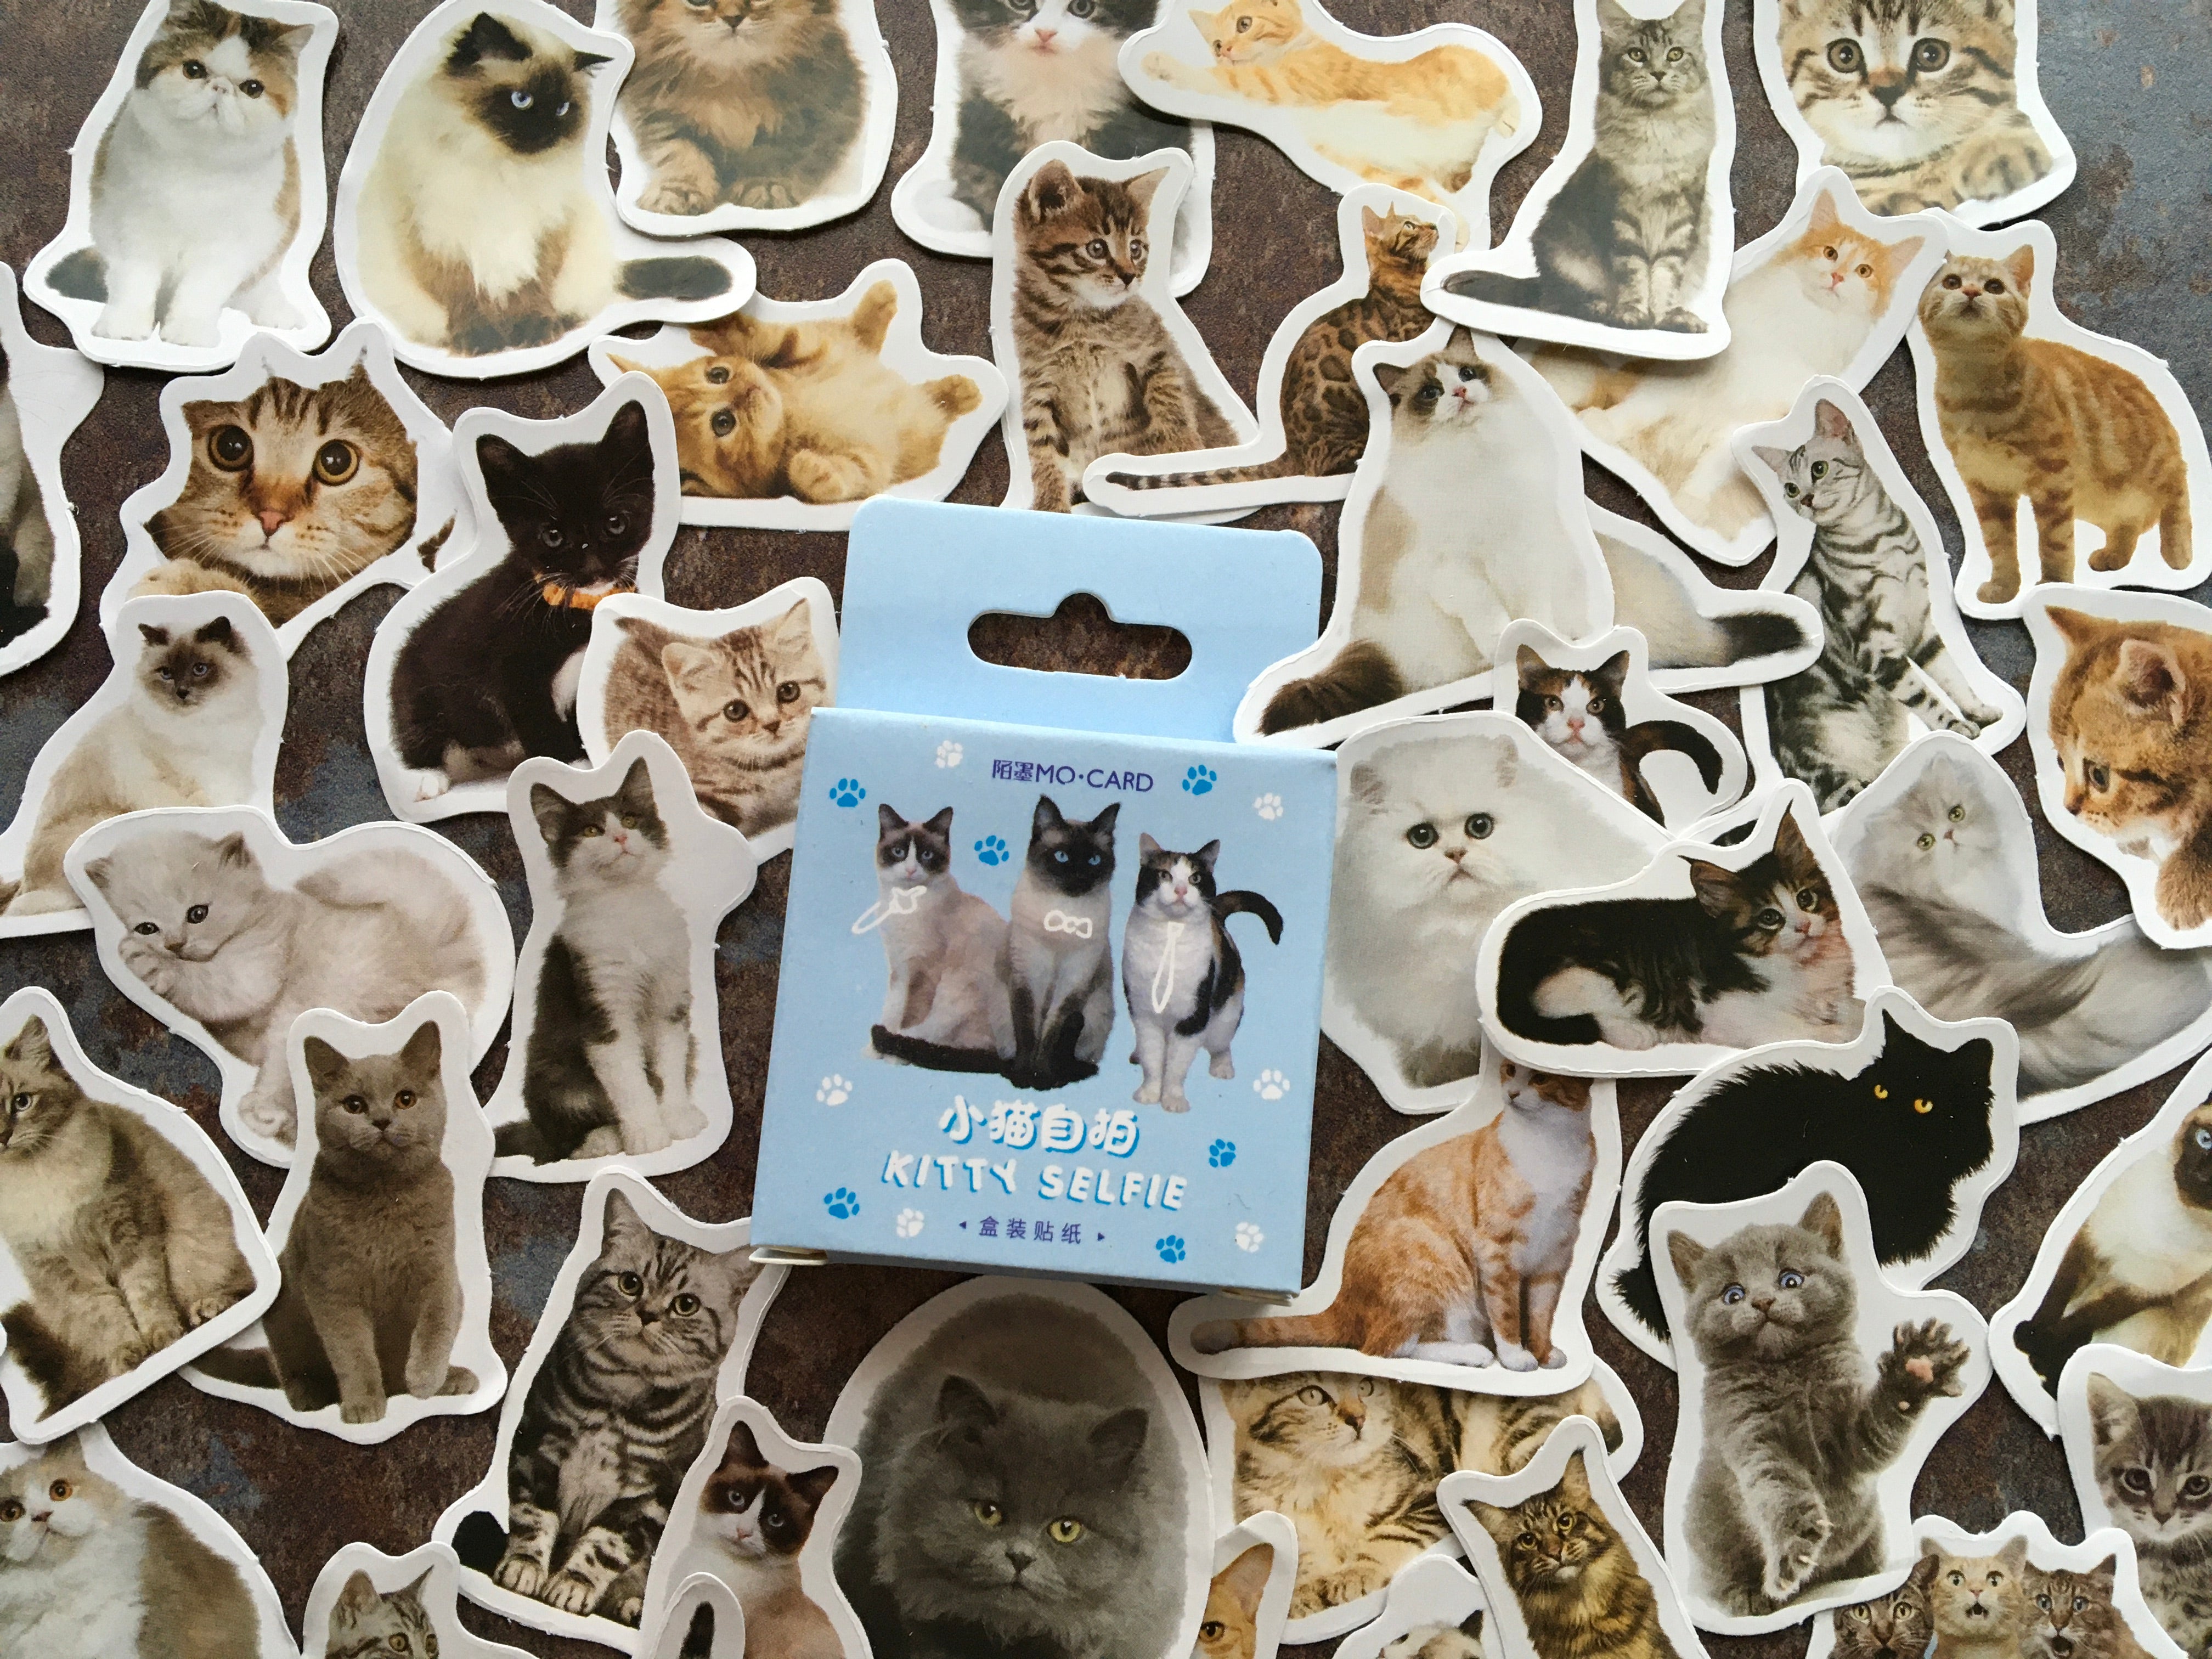 Cute Cats sticker mix for journaling or scrapbooking – BluebellHillCrafts